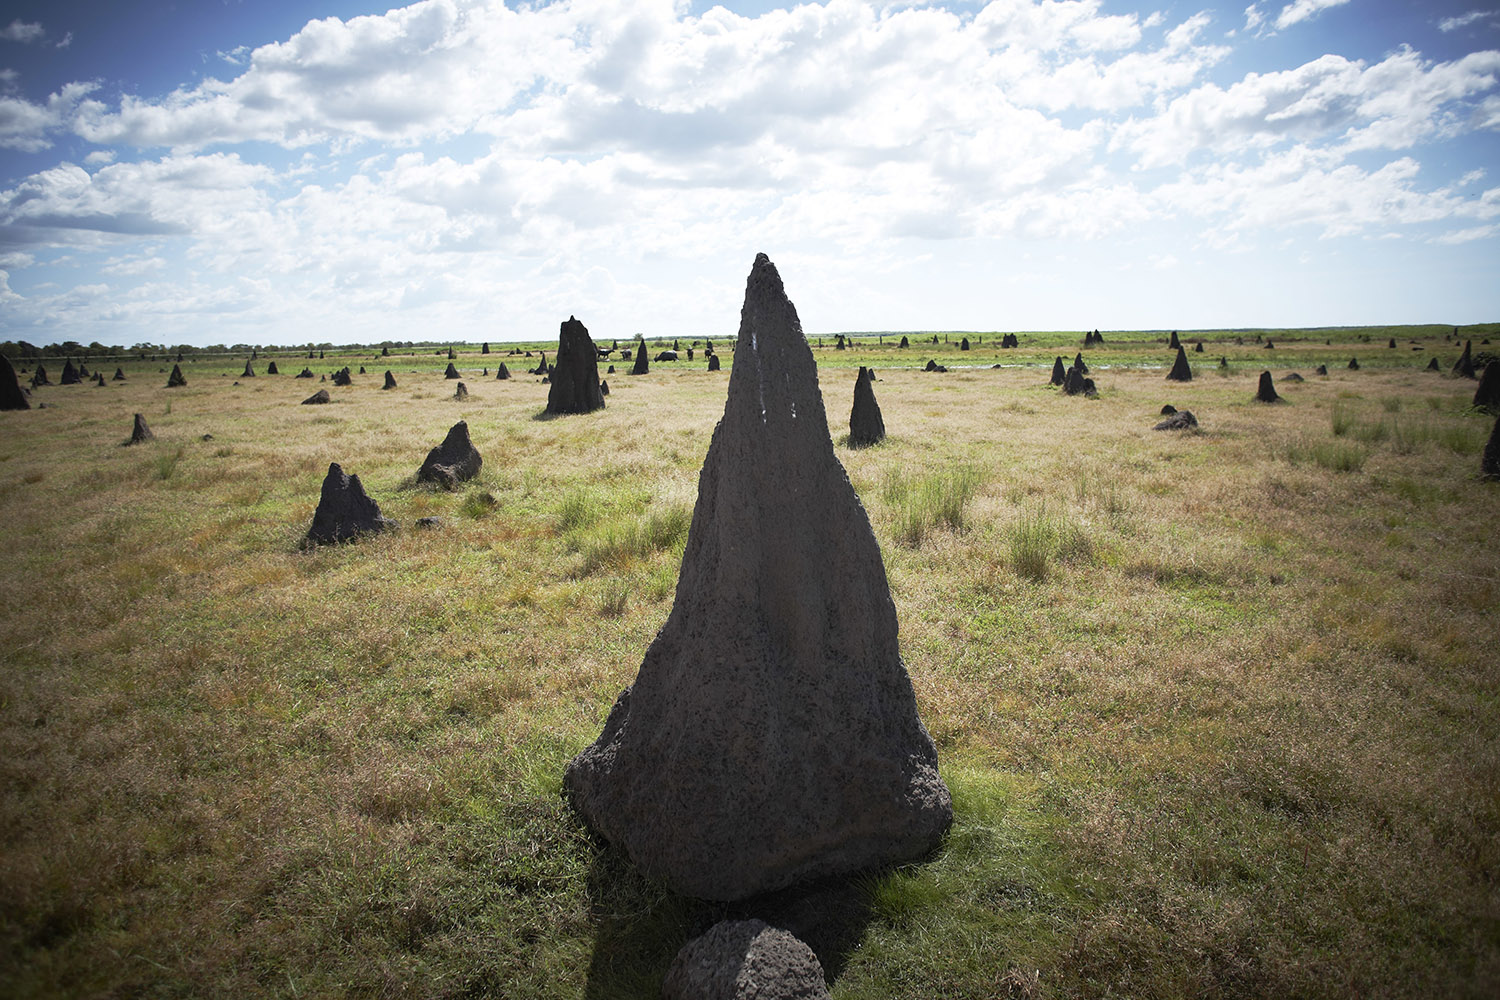 Magnetic Termite Mounds - Tourism Australia